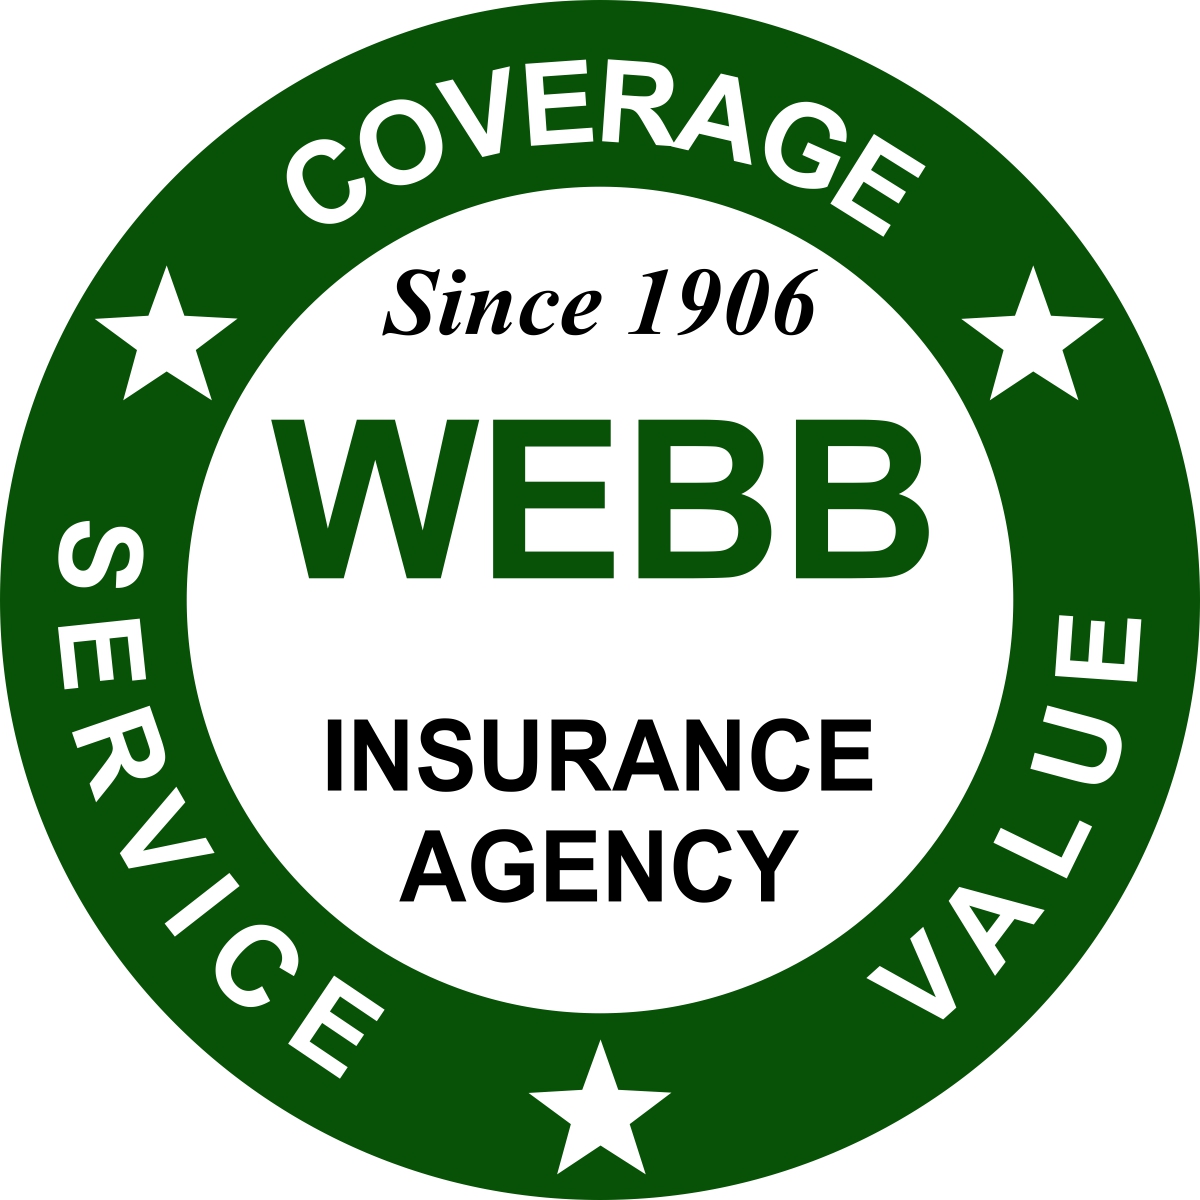 Webb Insurance Logo